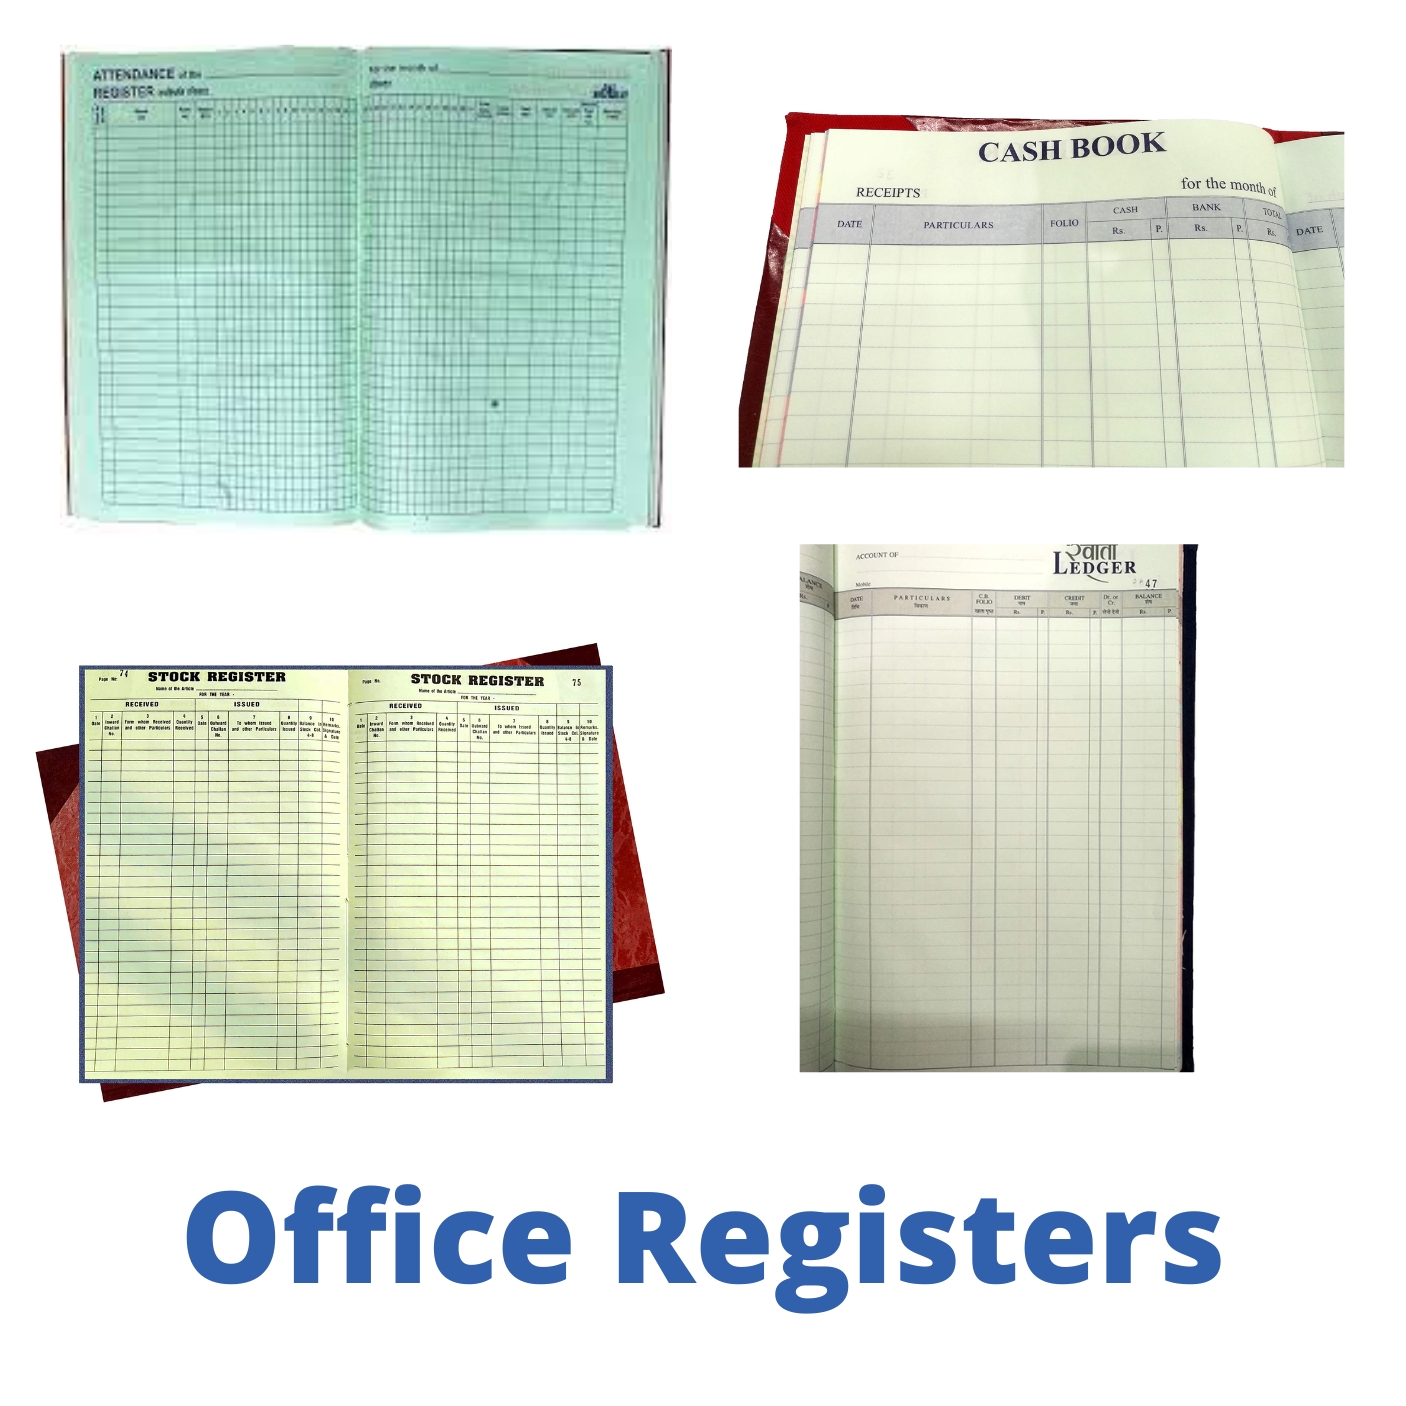 Office Registers